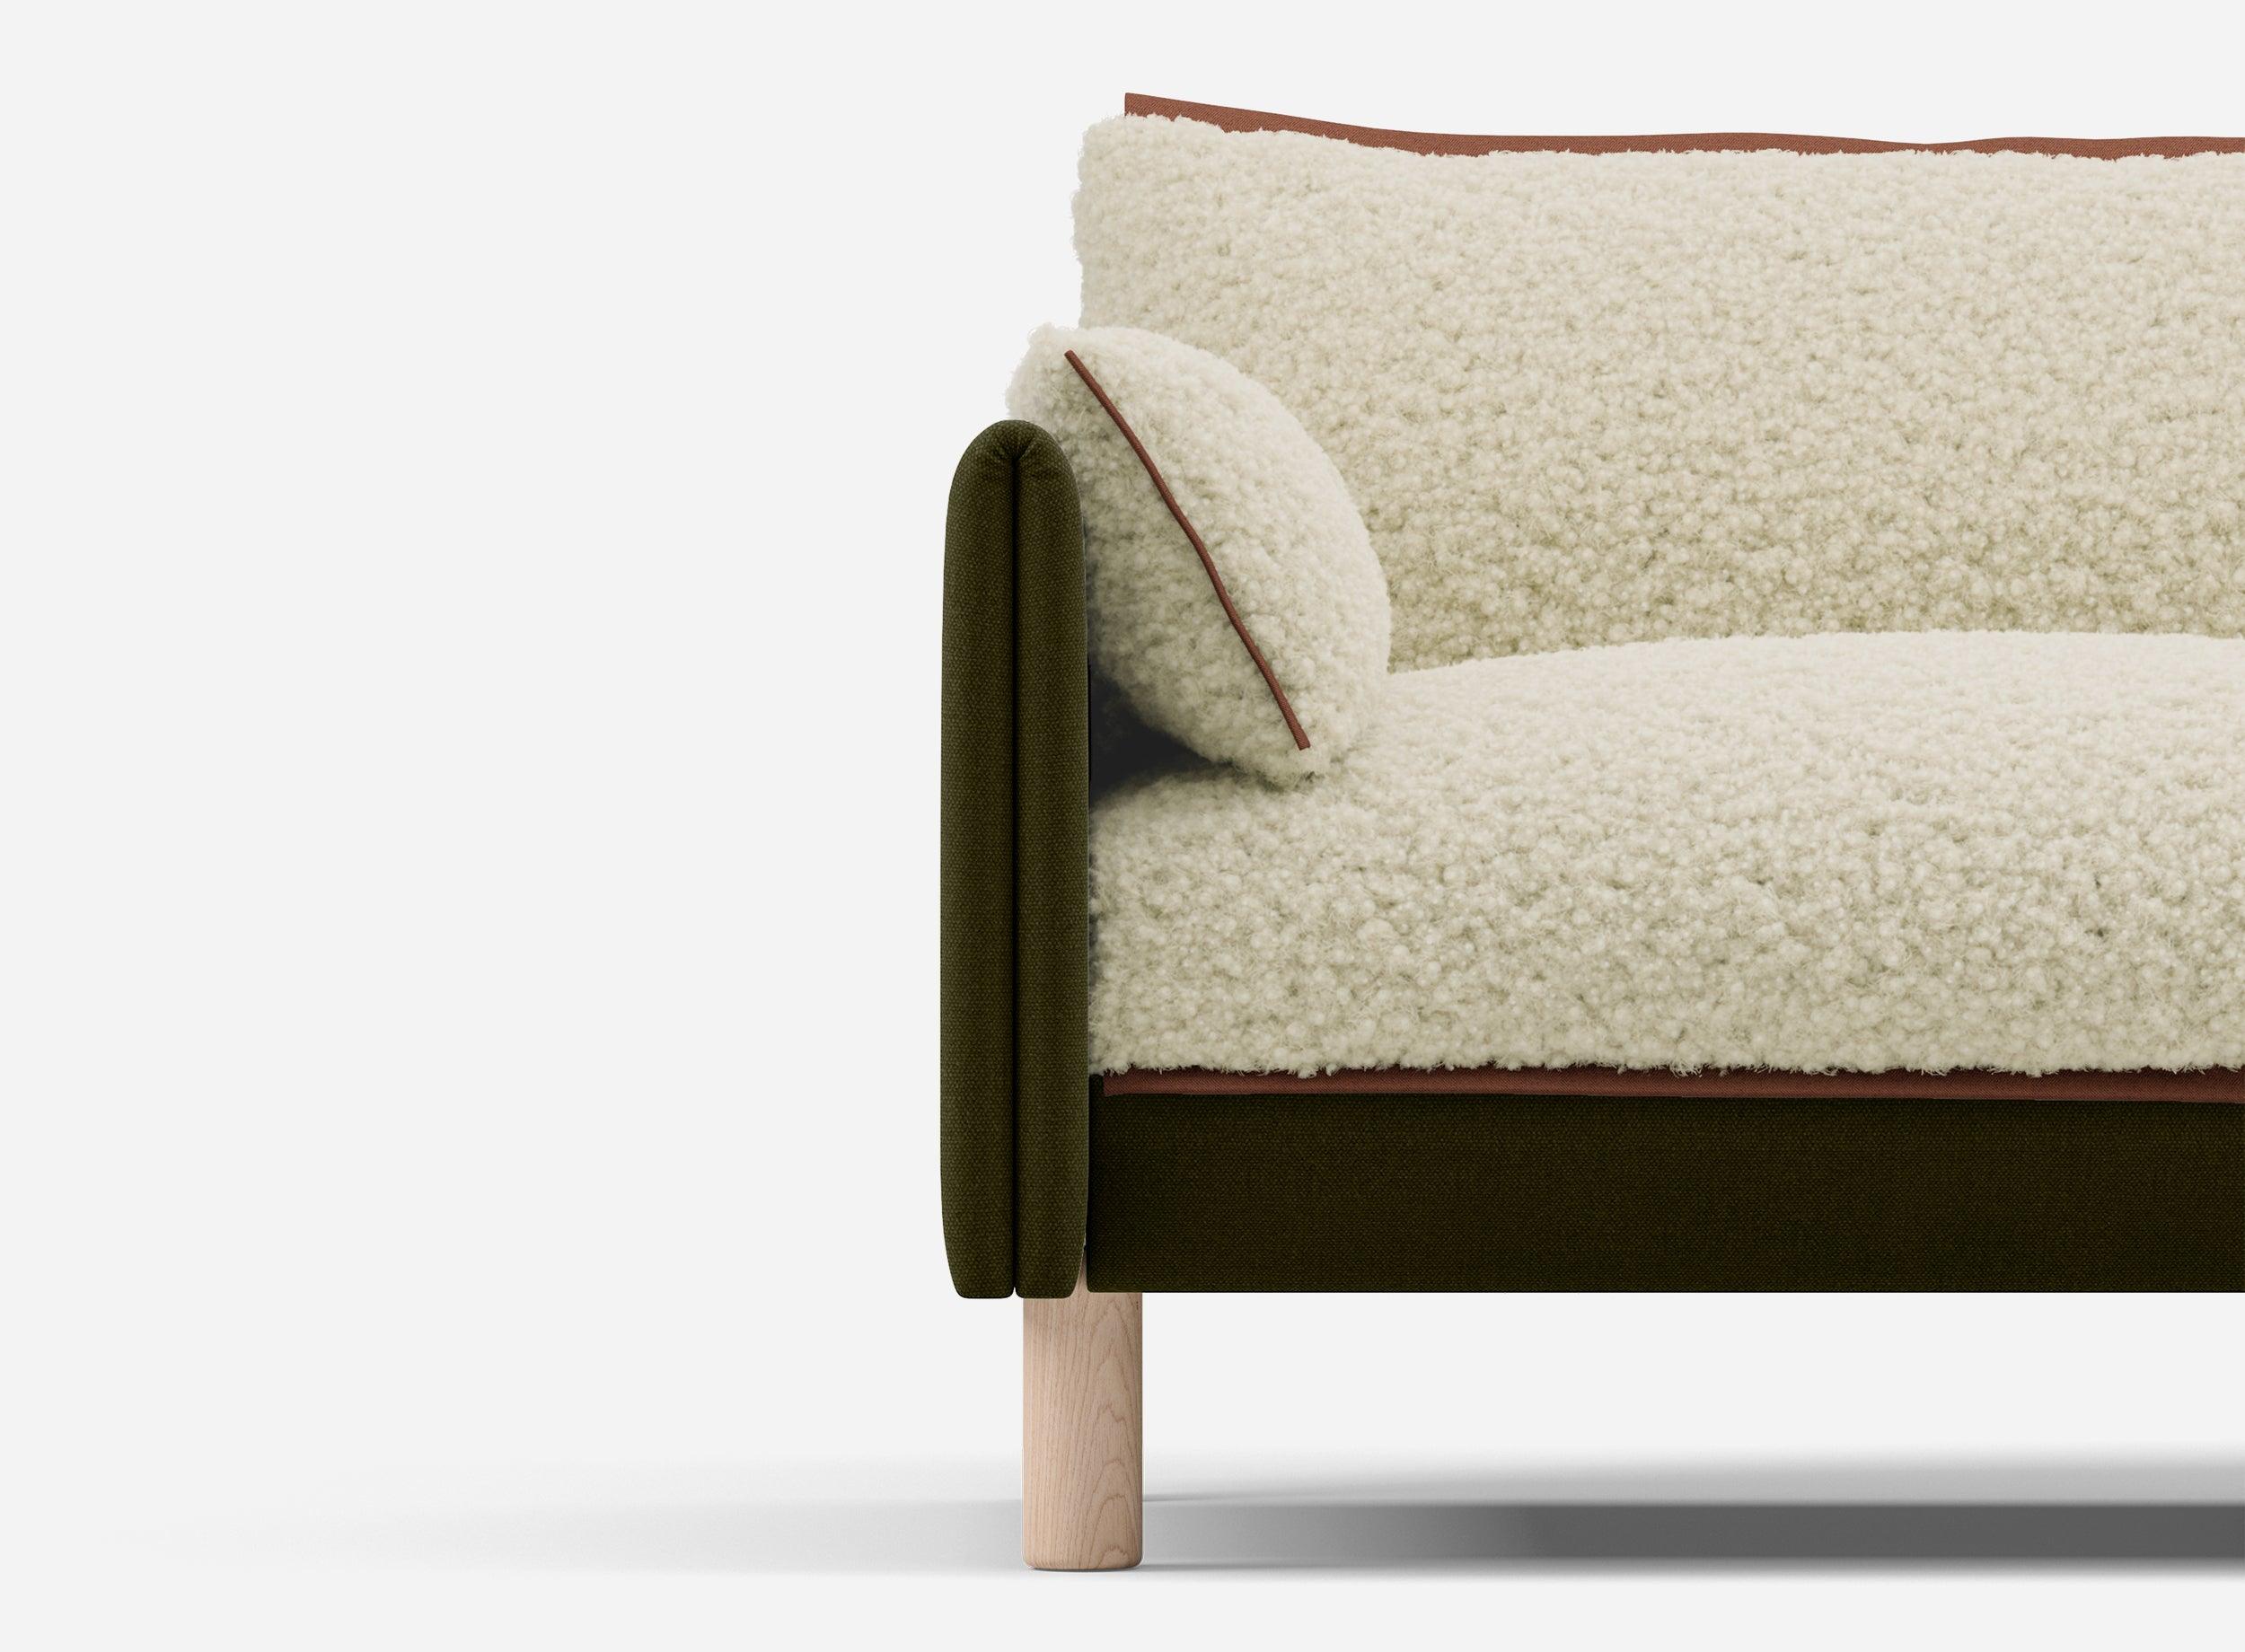 1.5 Seater Sofa | Cotton Meadow - Cozmo @ Cream Fleece Jacket | Brick Trim